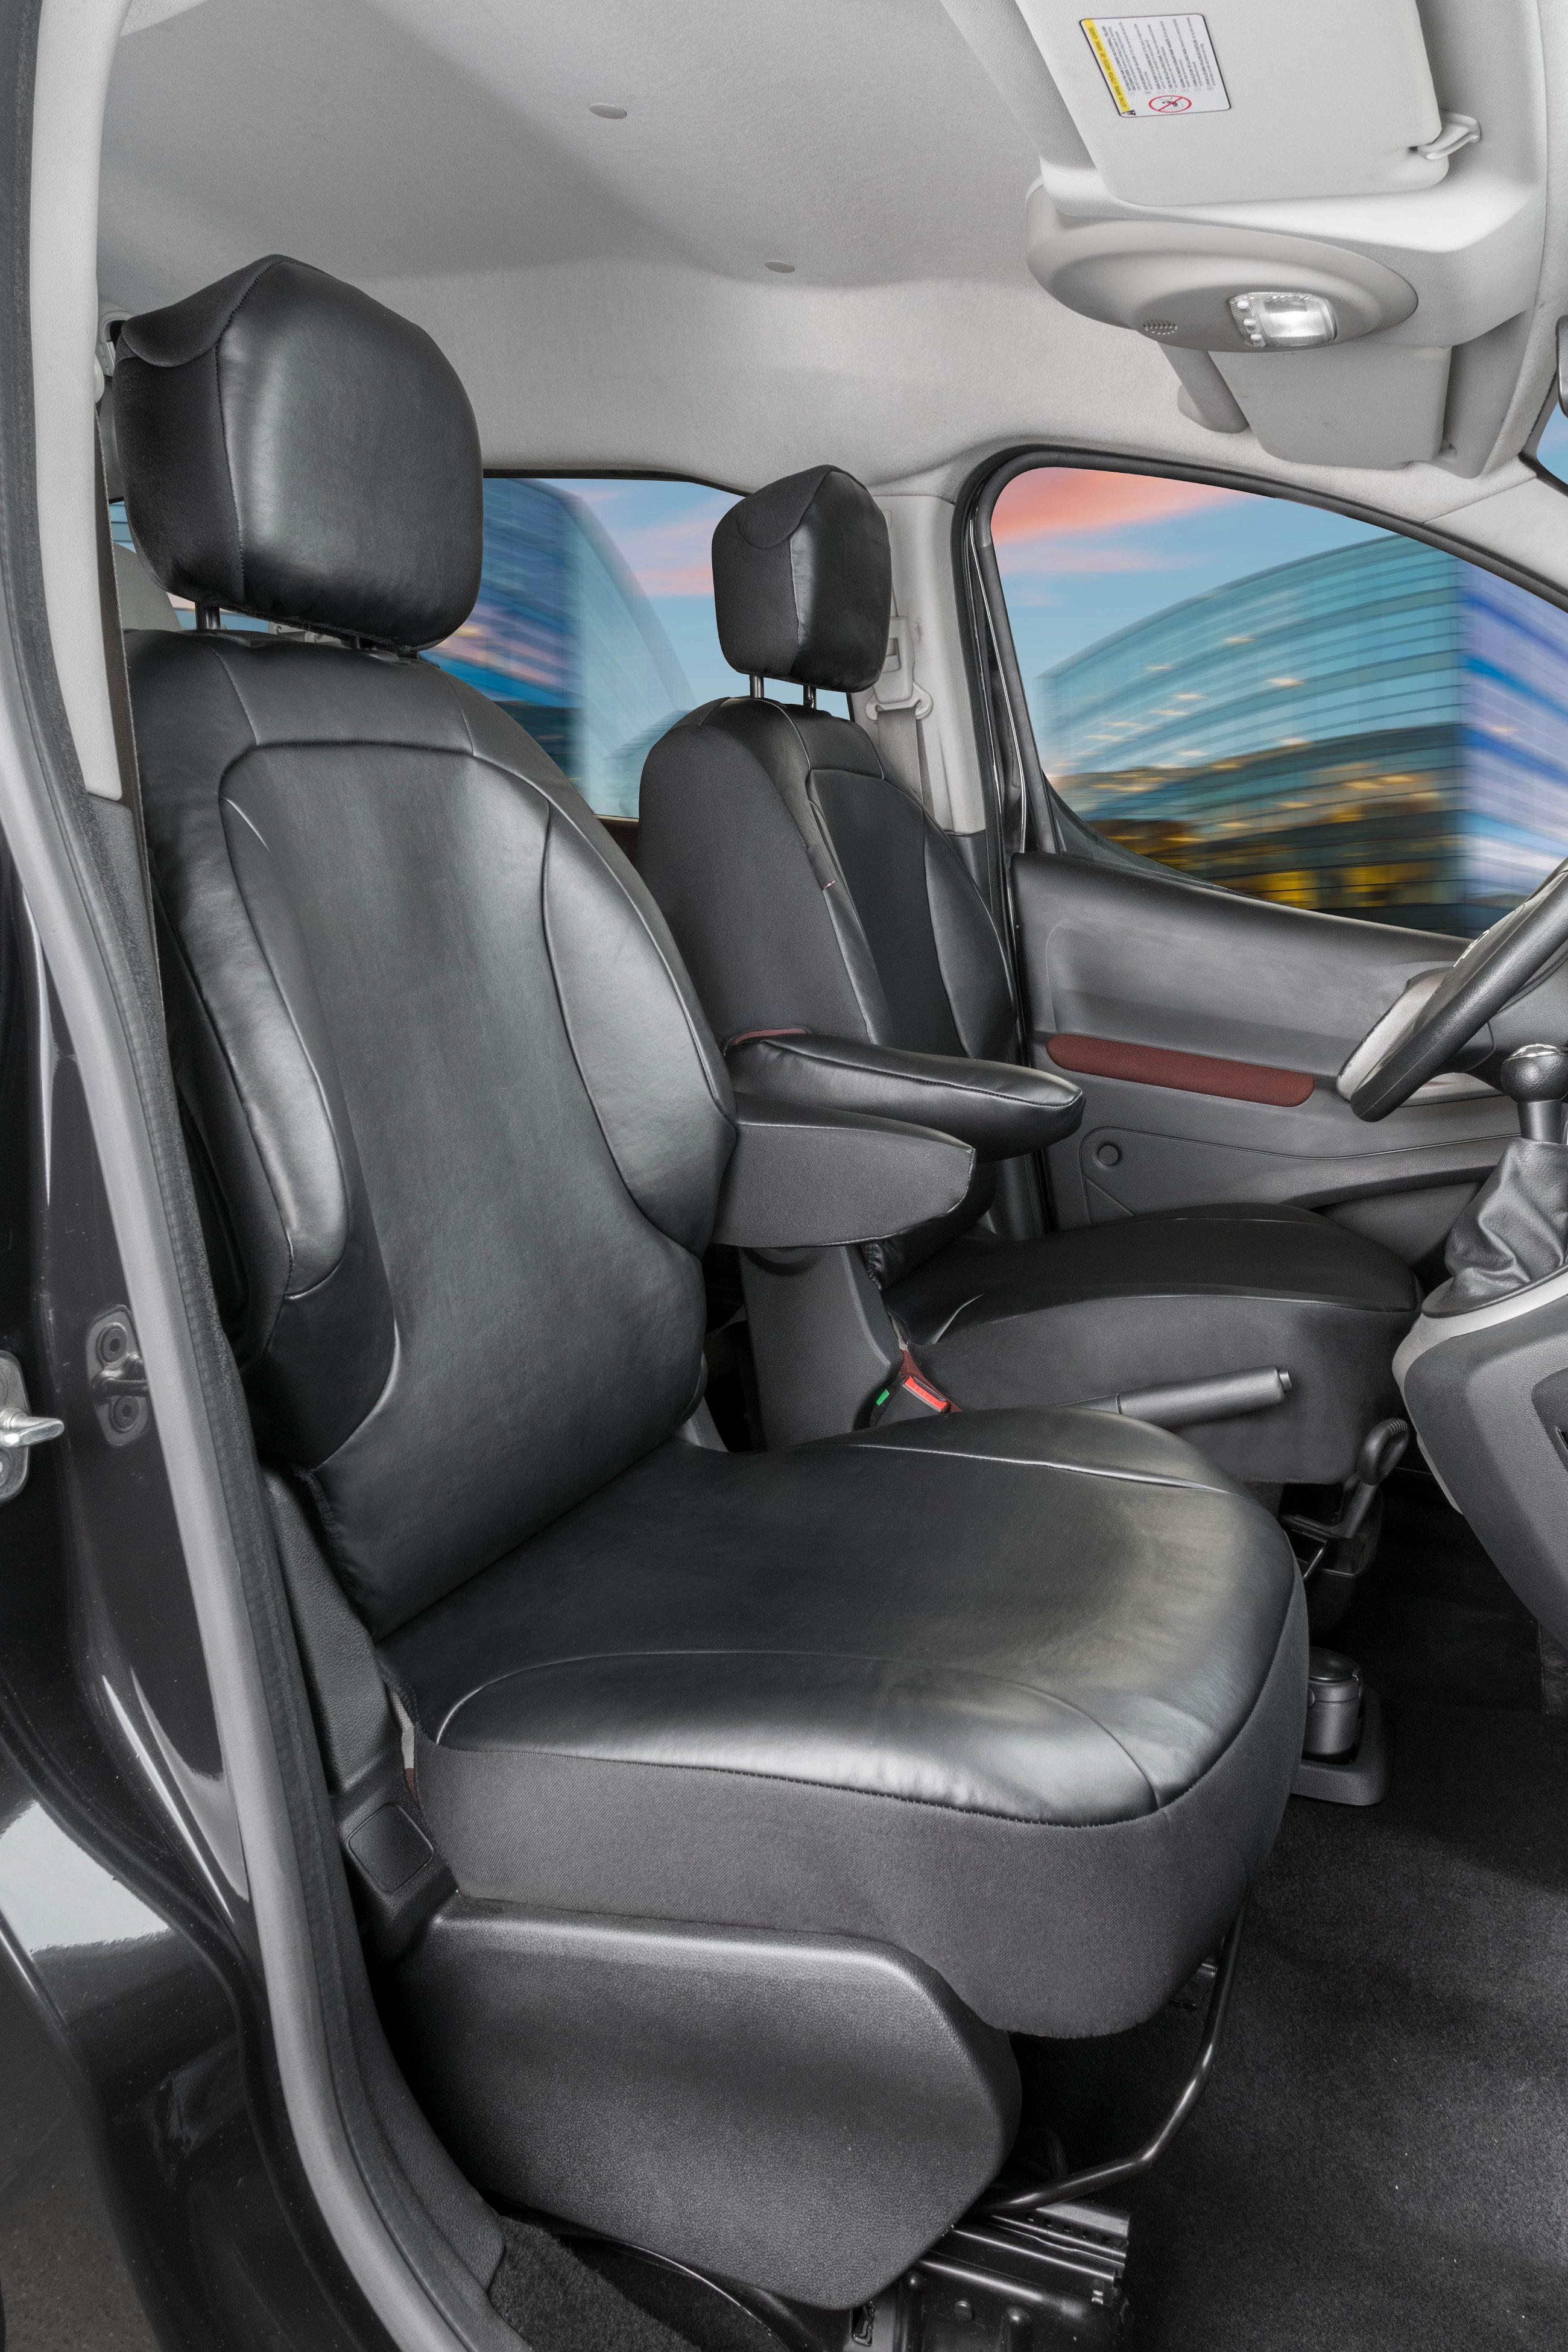 Passform Sitzbezug aus Kunstleder kompatibel mit Peugeot Partner, 2 Einzelsitze Armlehne innen